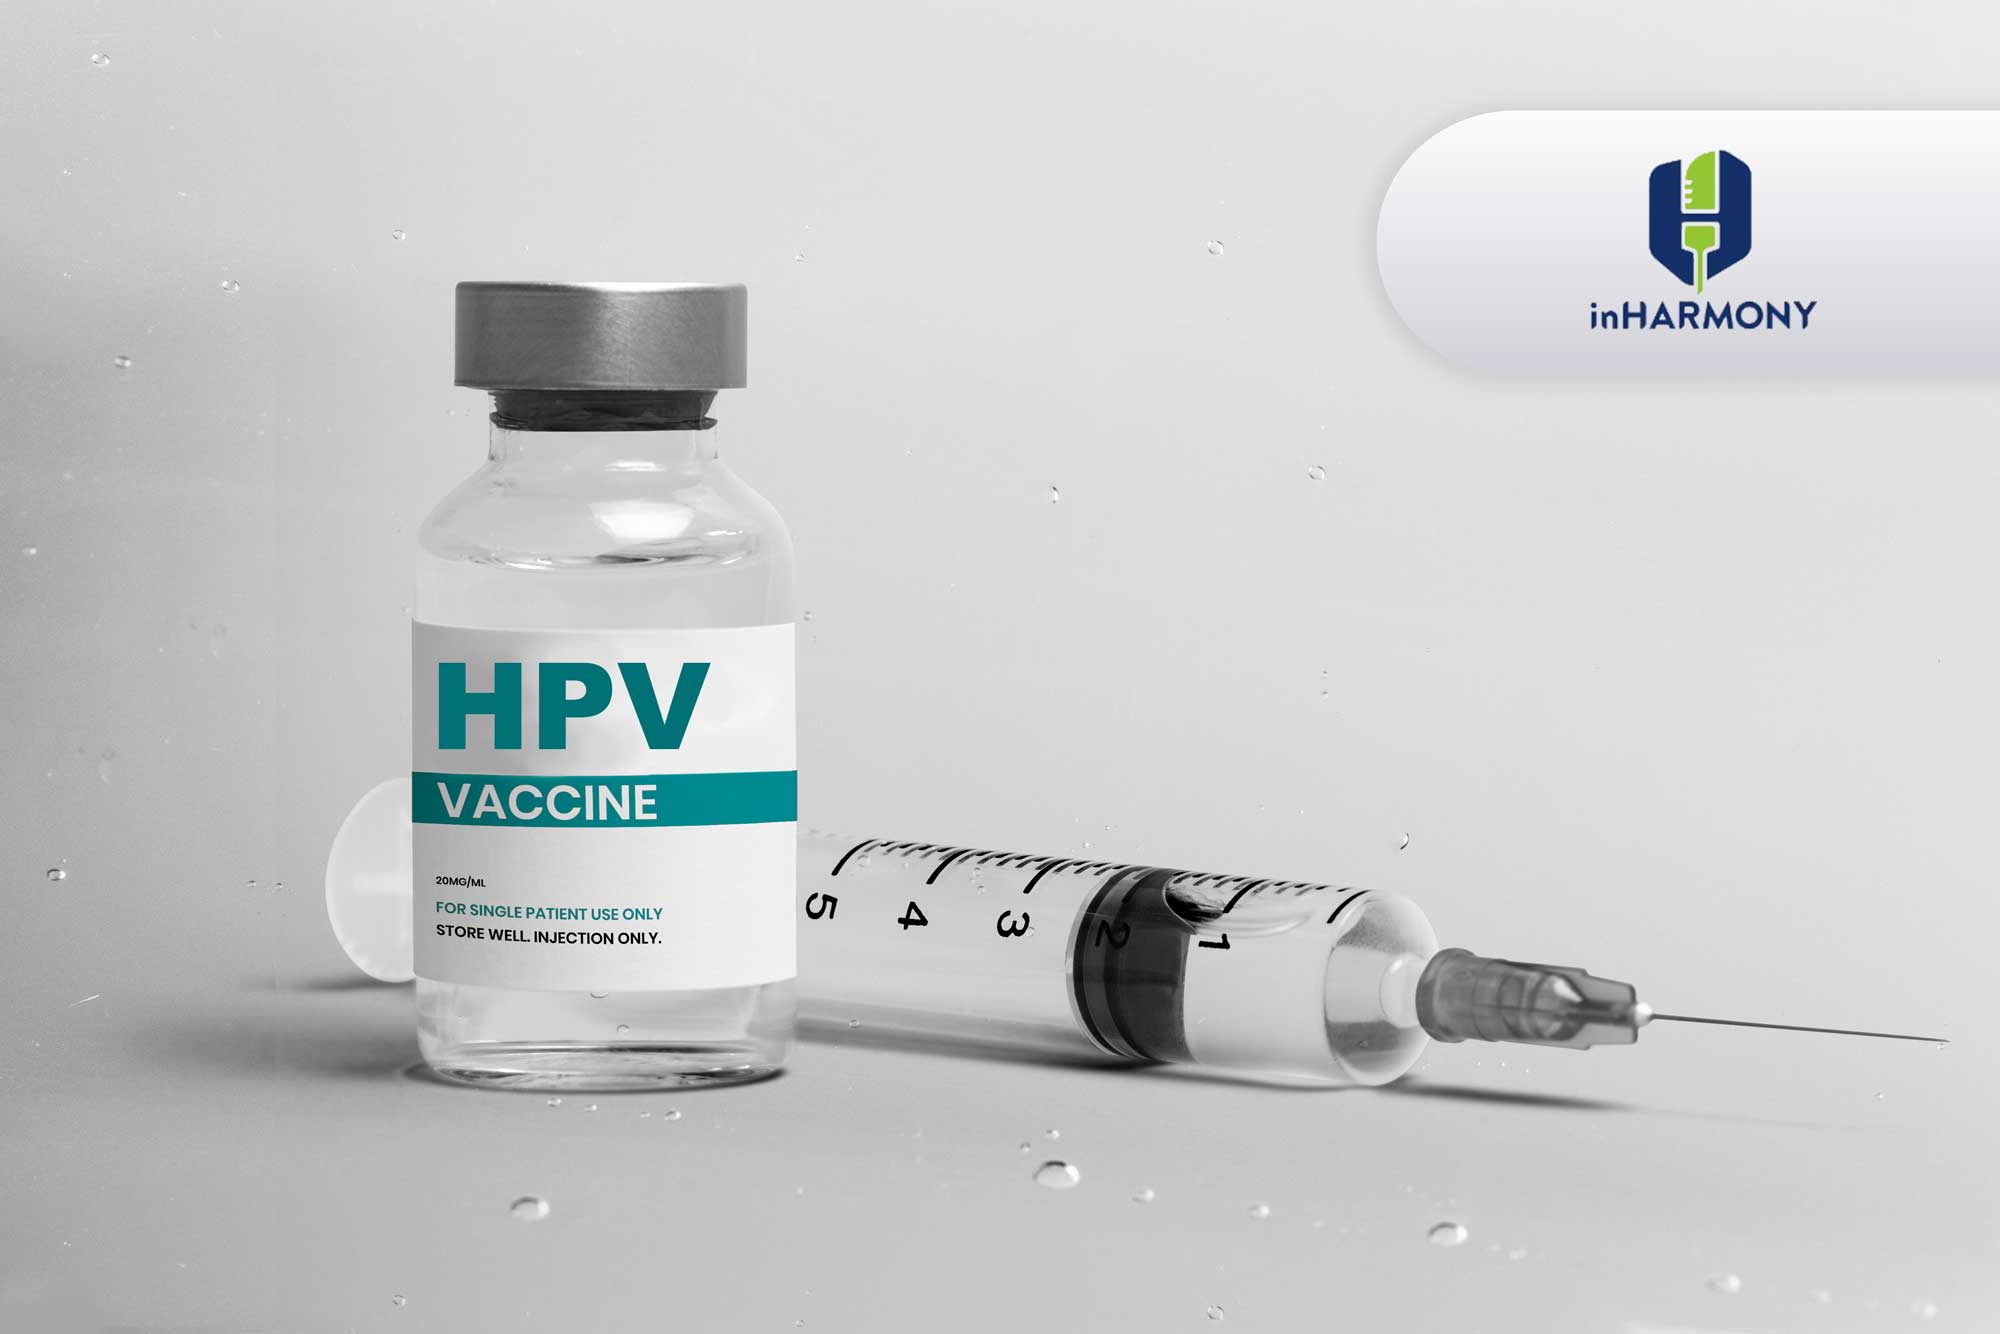 vaksin-hpv-inharmony_1691387716.jpg